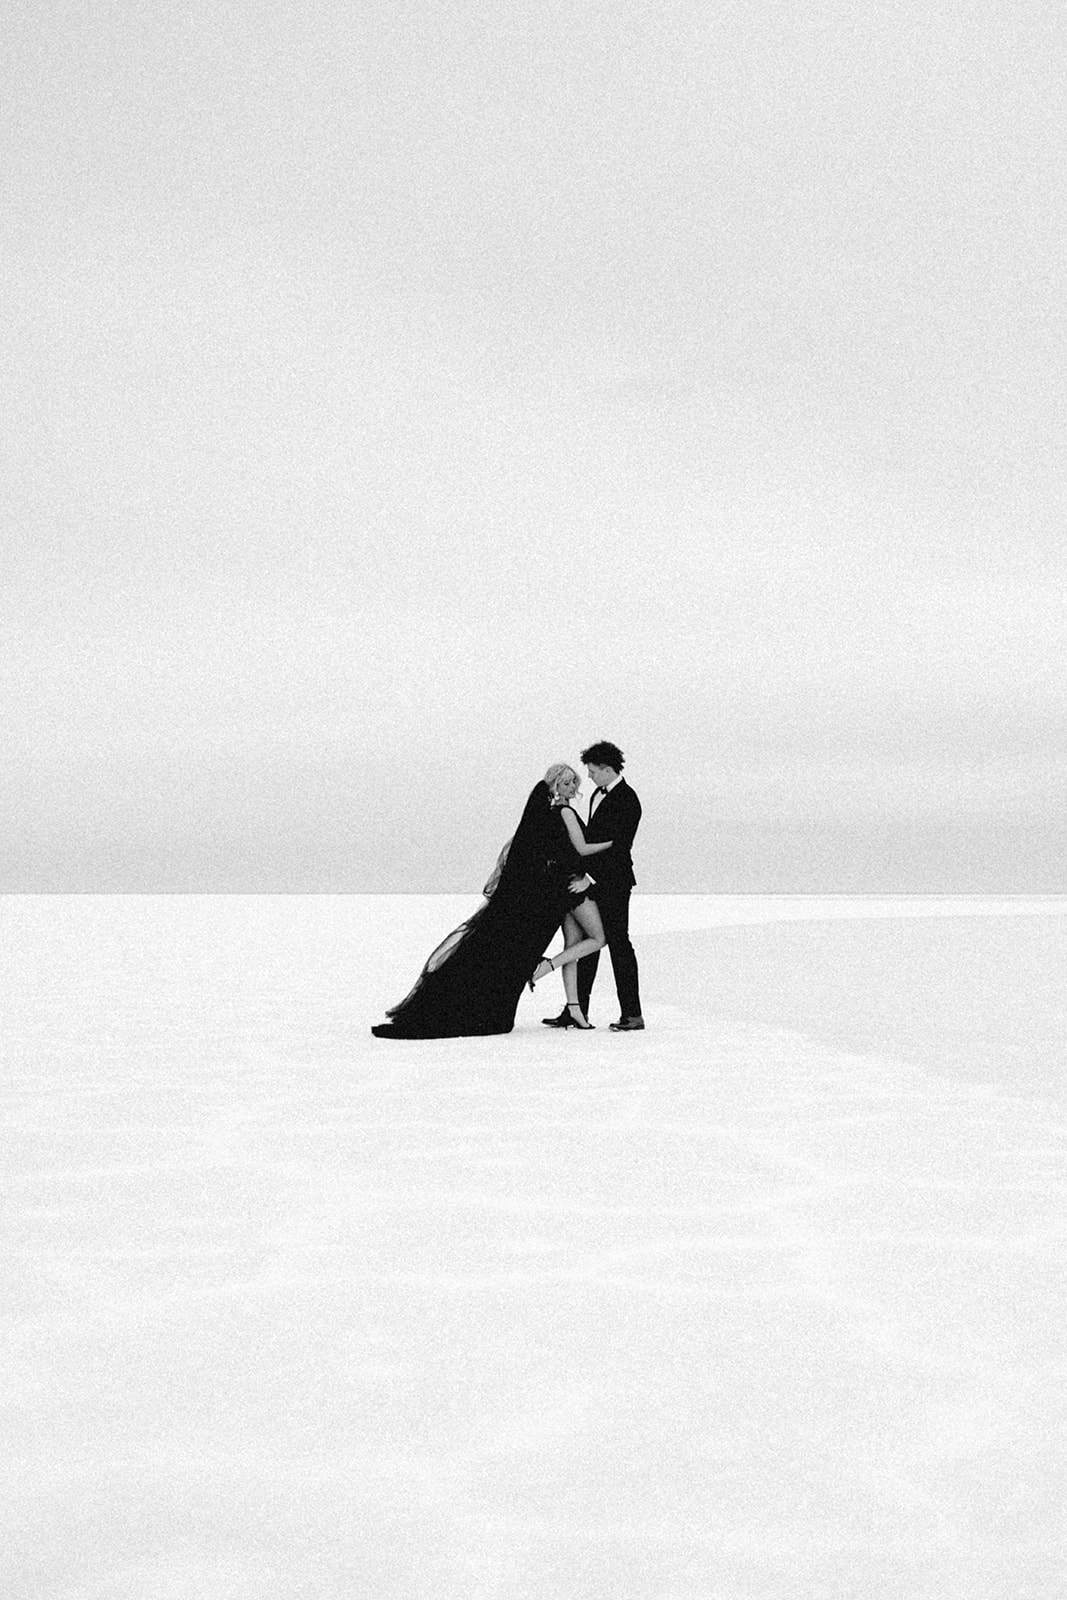 Utah photographer crafts a narrative of love at the Bonneville Salt Flats